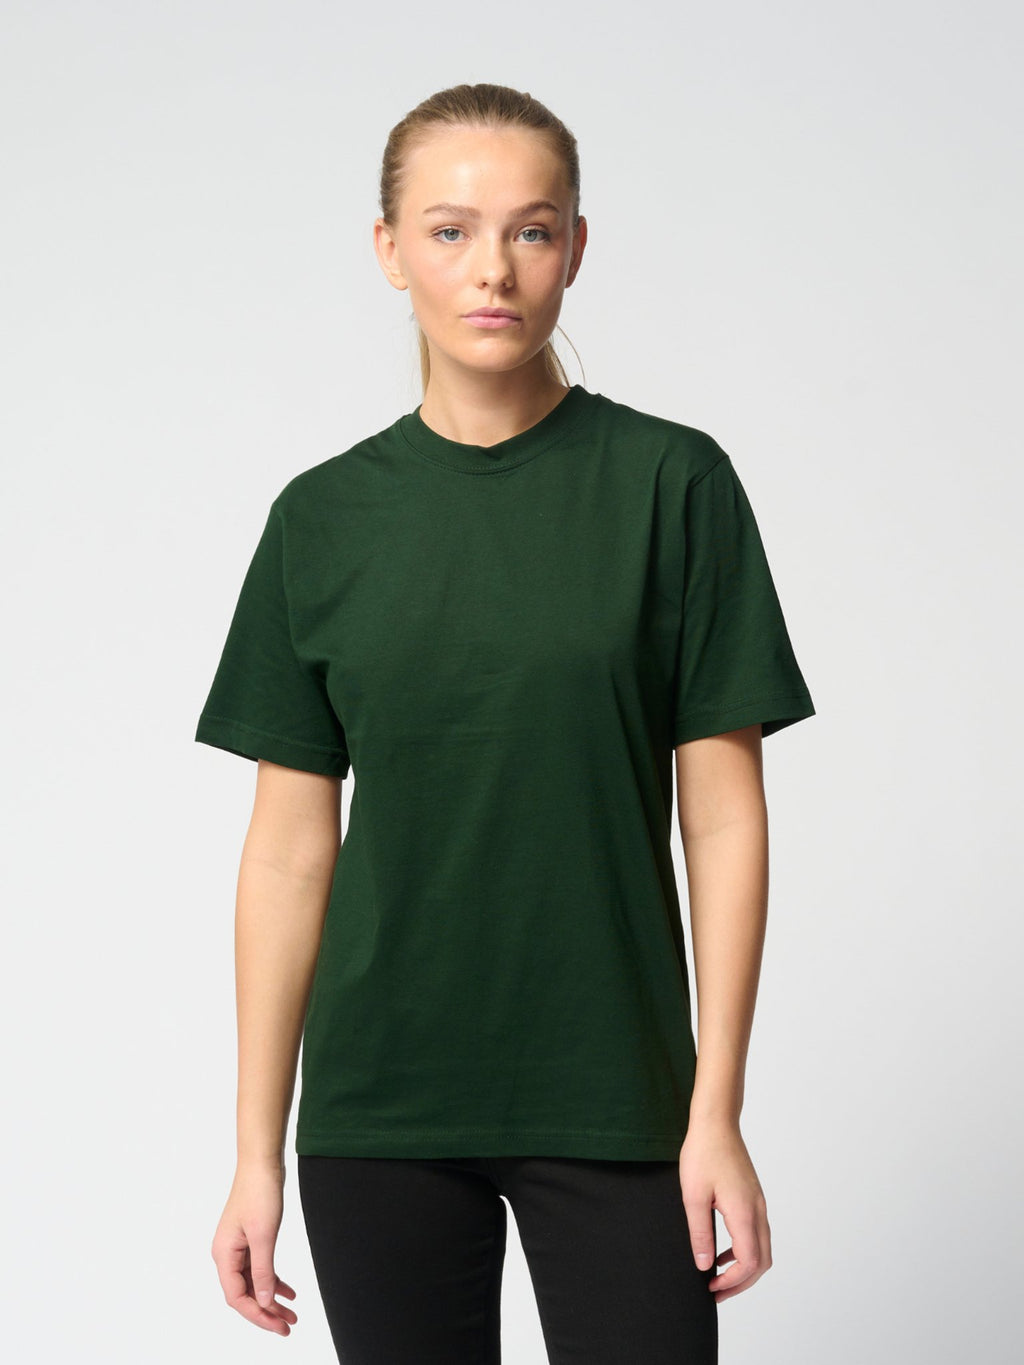 Übergroßes T-Shirt-Frauenpaketgeschäft (3 PCs.)